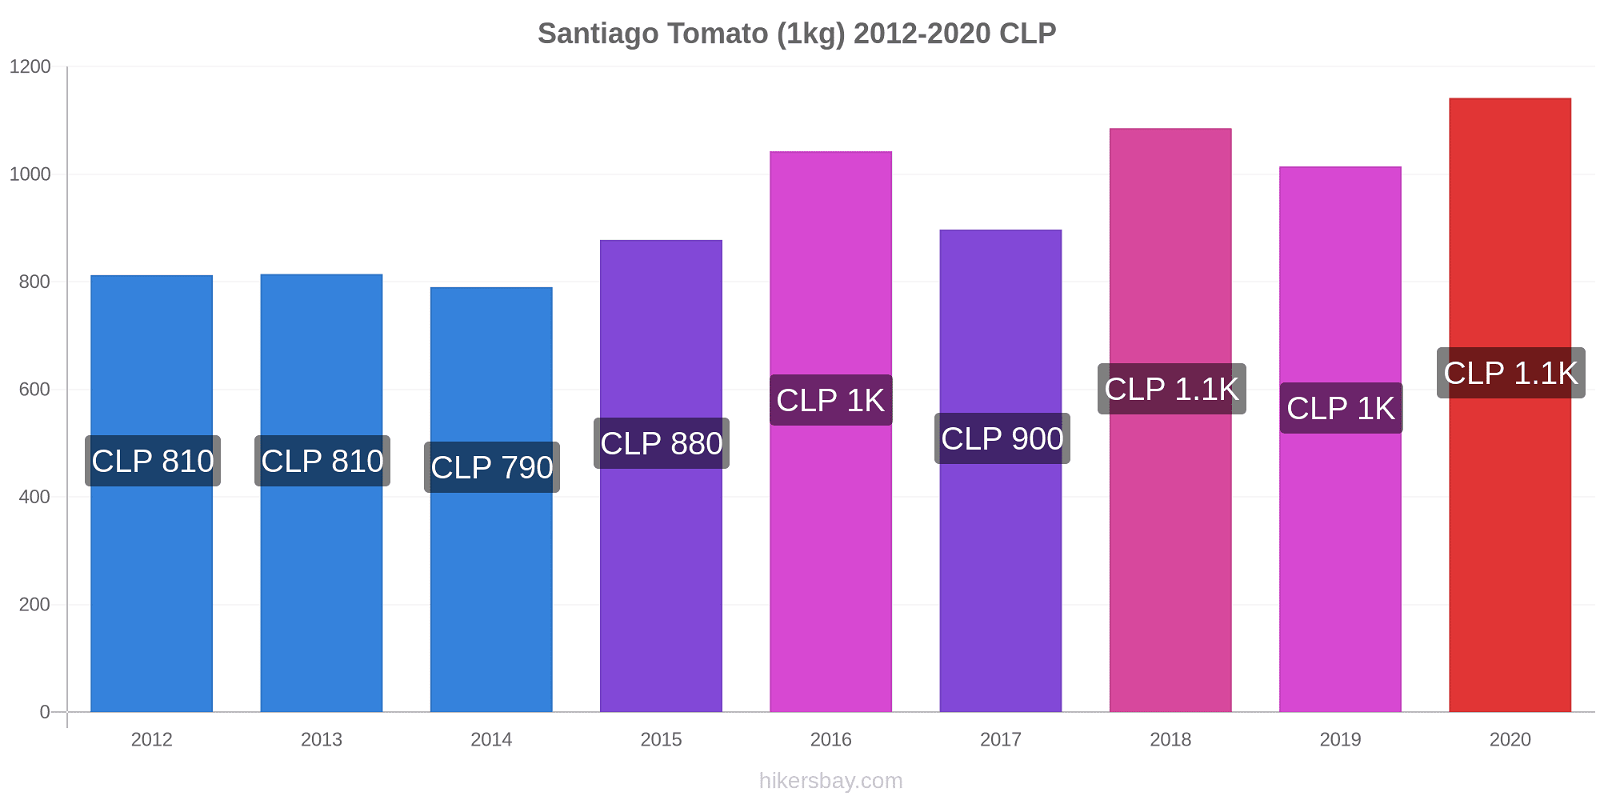 Santiago price changes Tomato (1kg) hikersbay.com